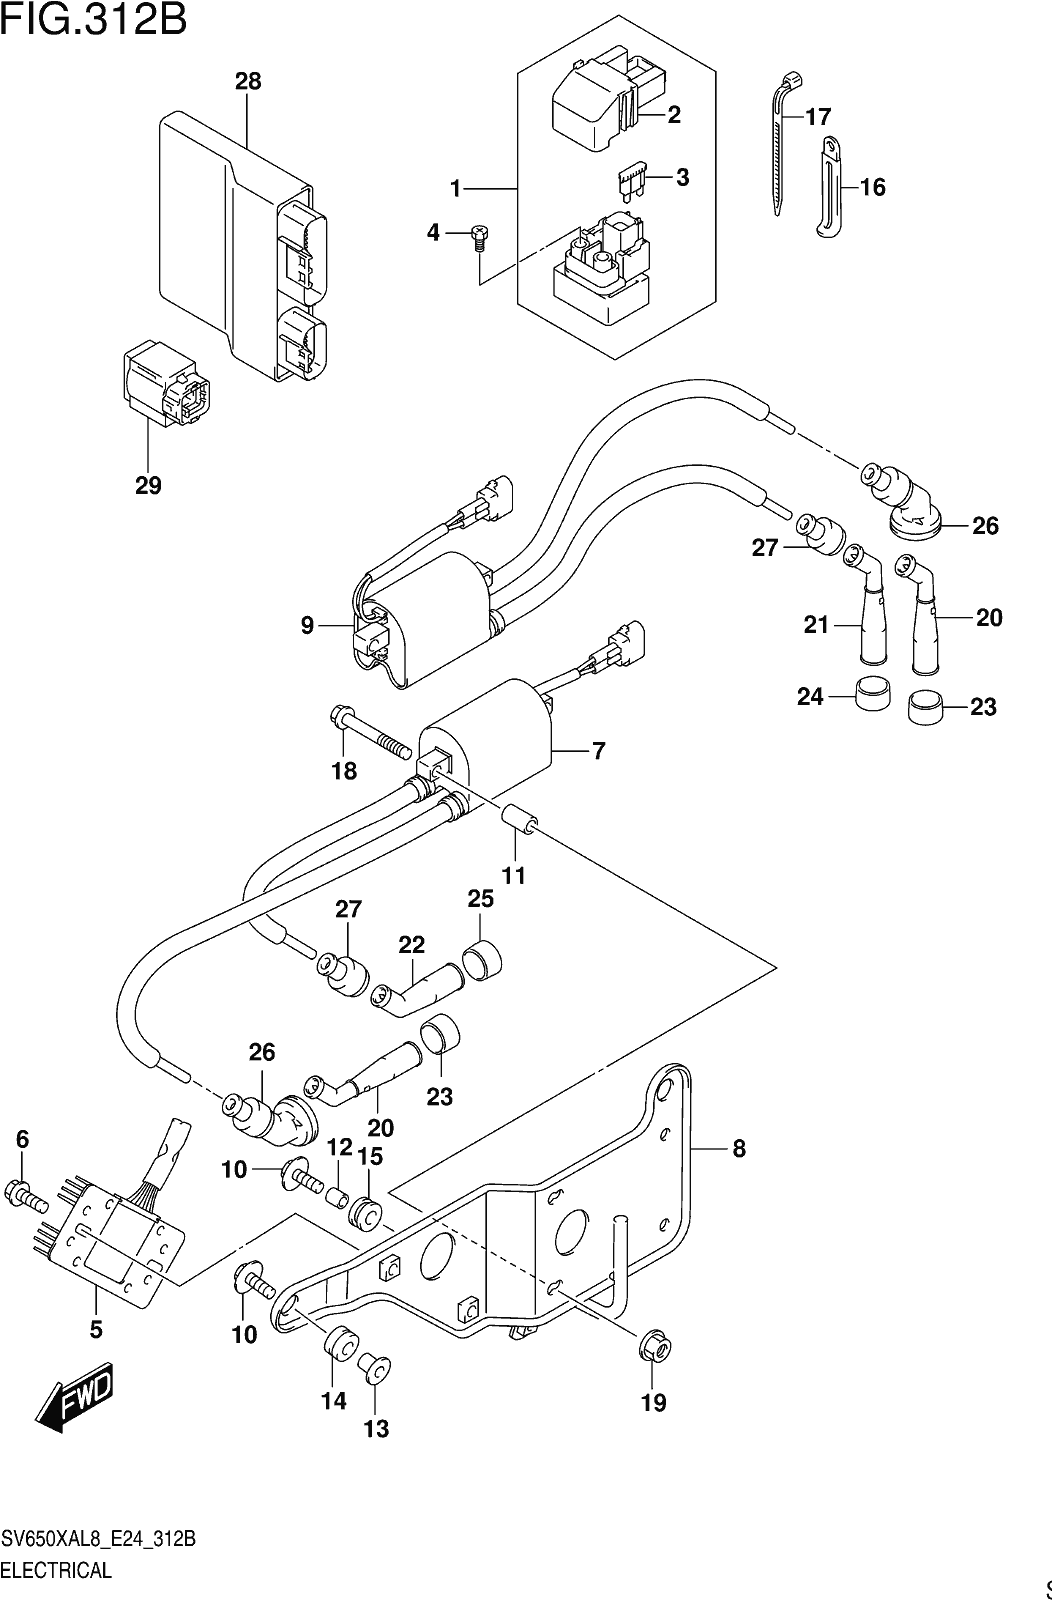 Fig.312b Electrical (sv650xaul8 E24)